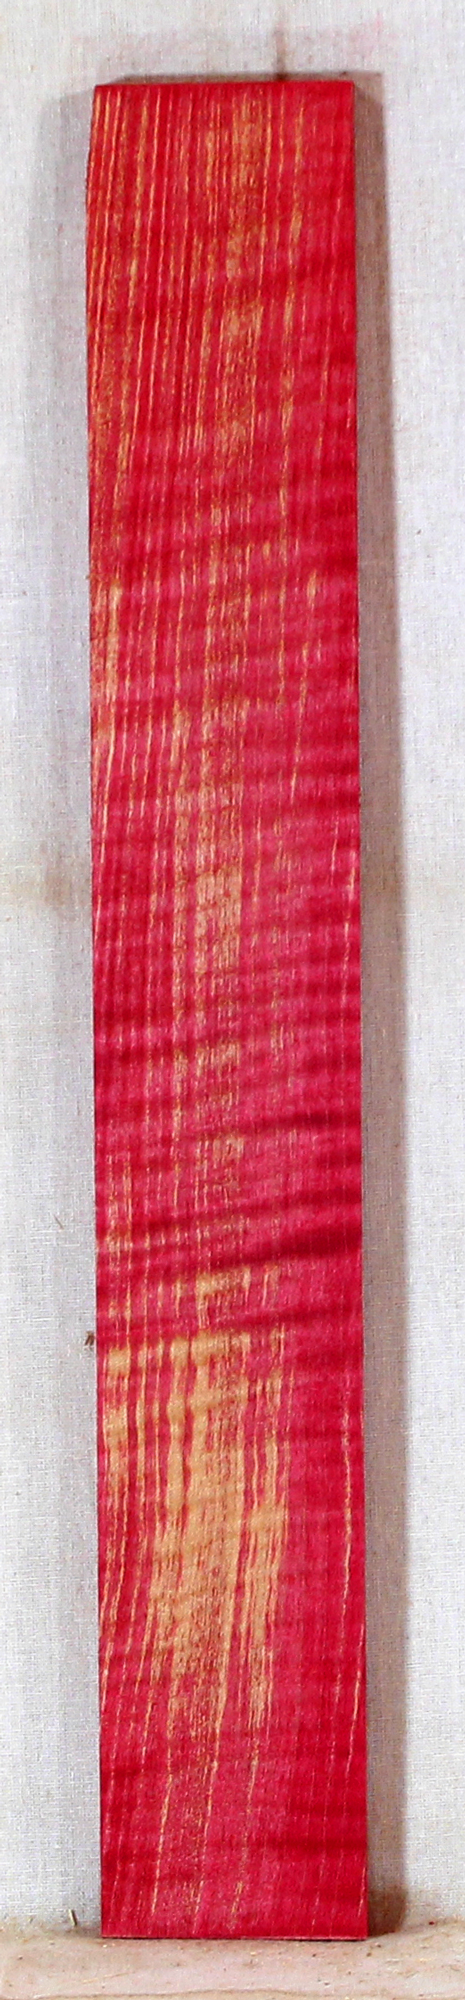 Maple Ukulele Red Fingerboard Stabilized (EH79)